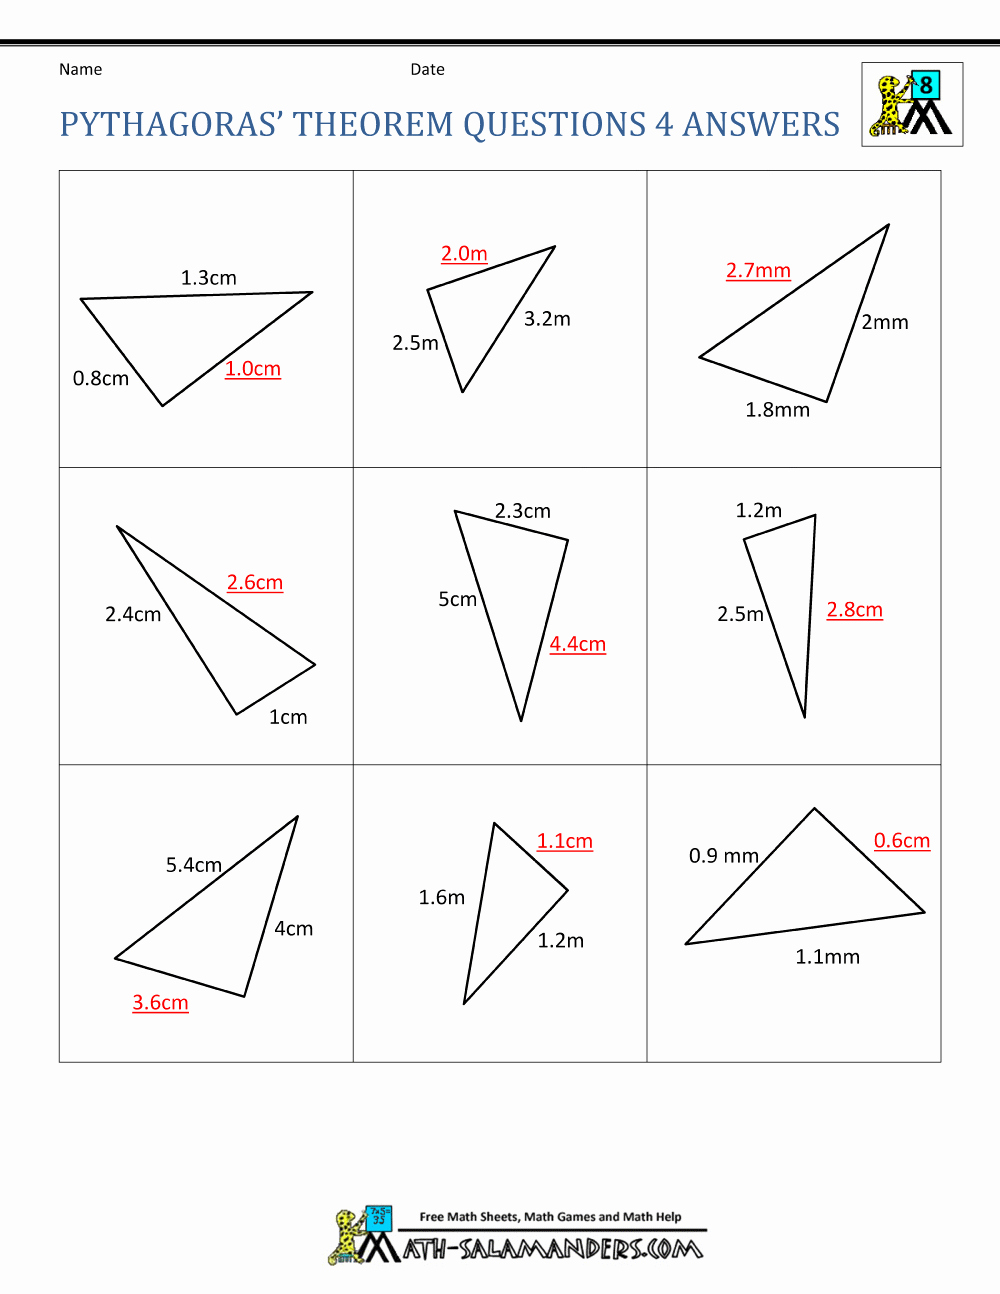 Pythagorean theorem Worksheet with Answers Elegant Pythagoras theorem Questions